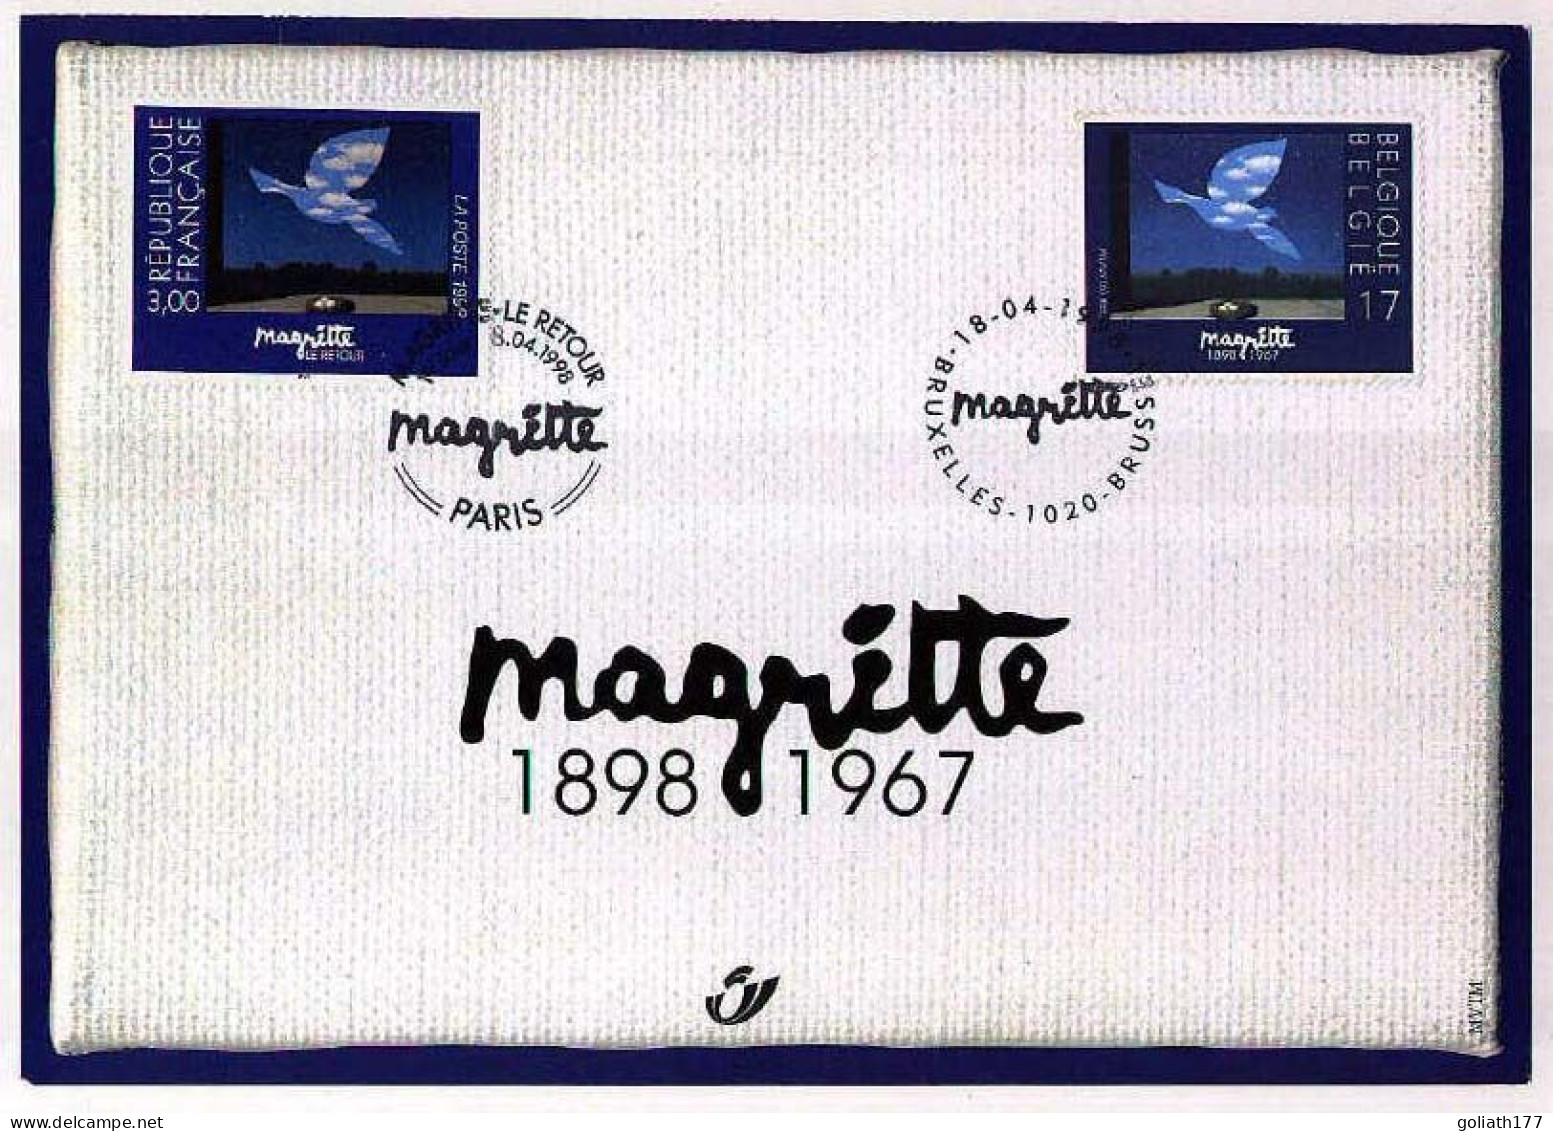 2755HK - Herdenkingskaart "Magritte" - Souvenir Cards - Joint Issues [HK]